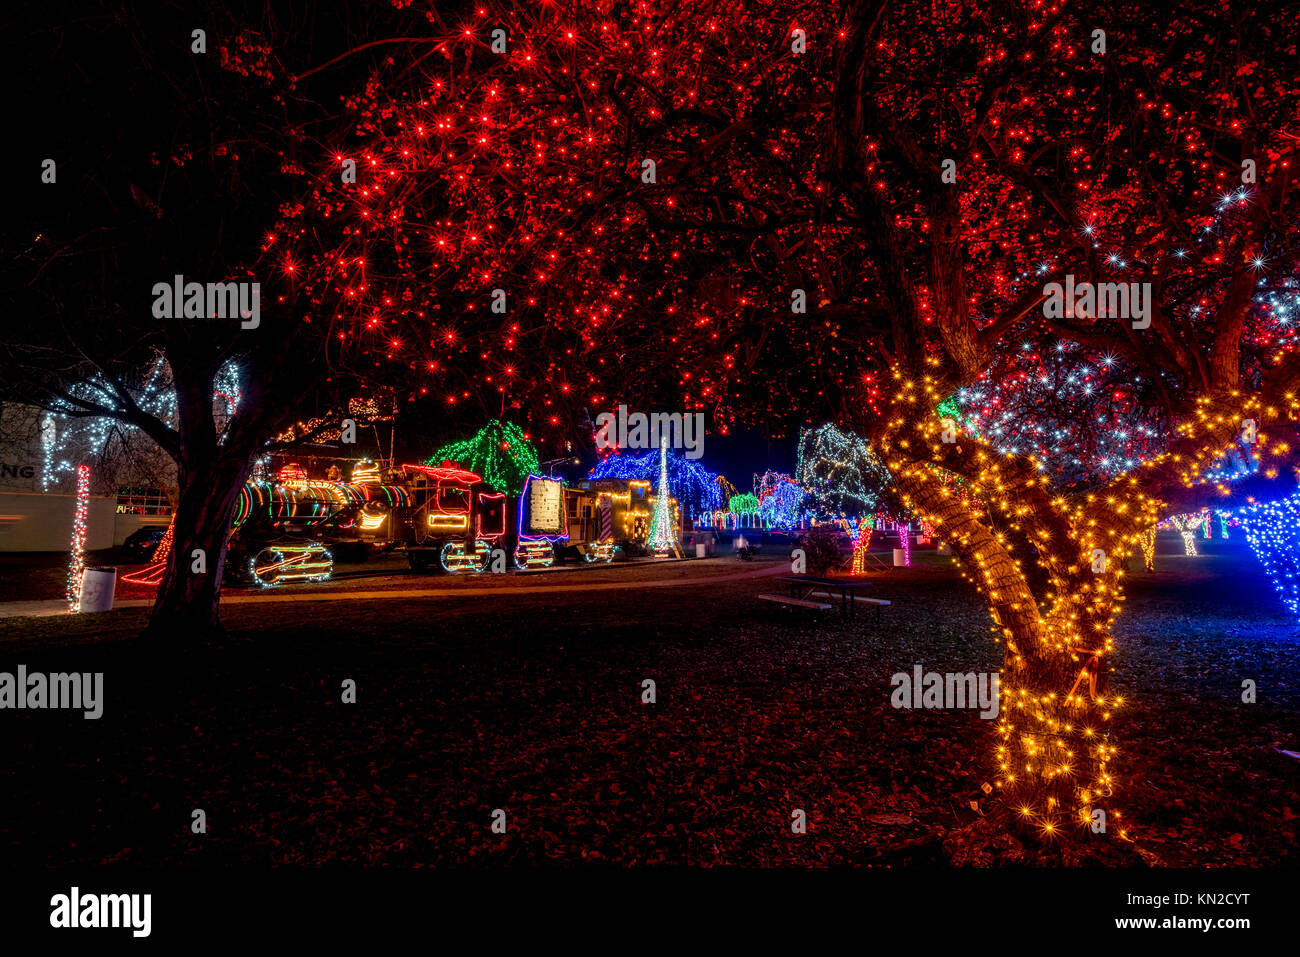 Winter Spirit Christmas lights display in Lewiston, Idaho's Locomotive Park. Stock Photo